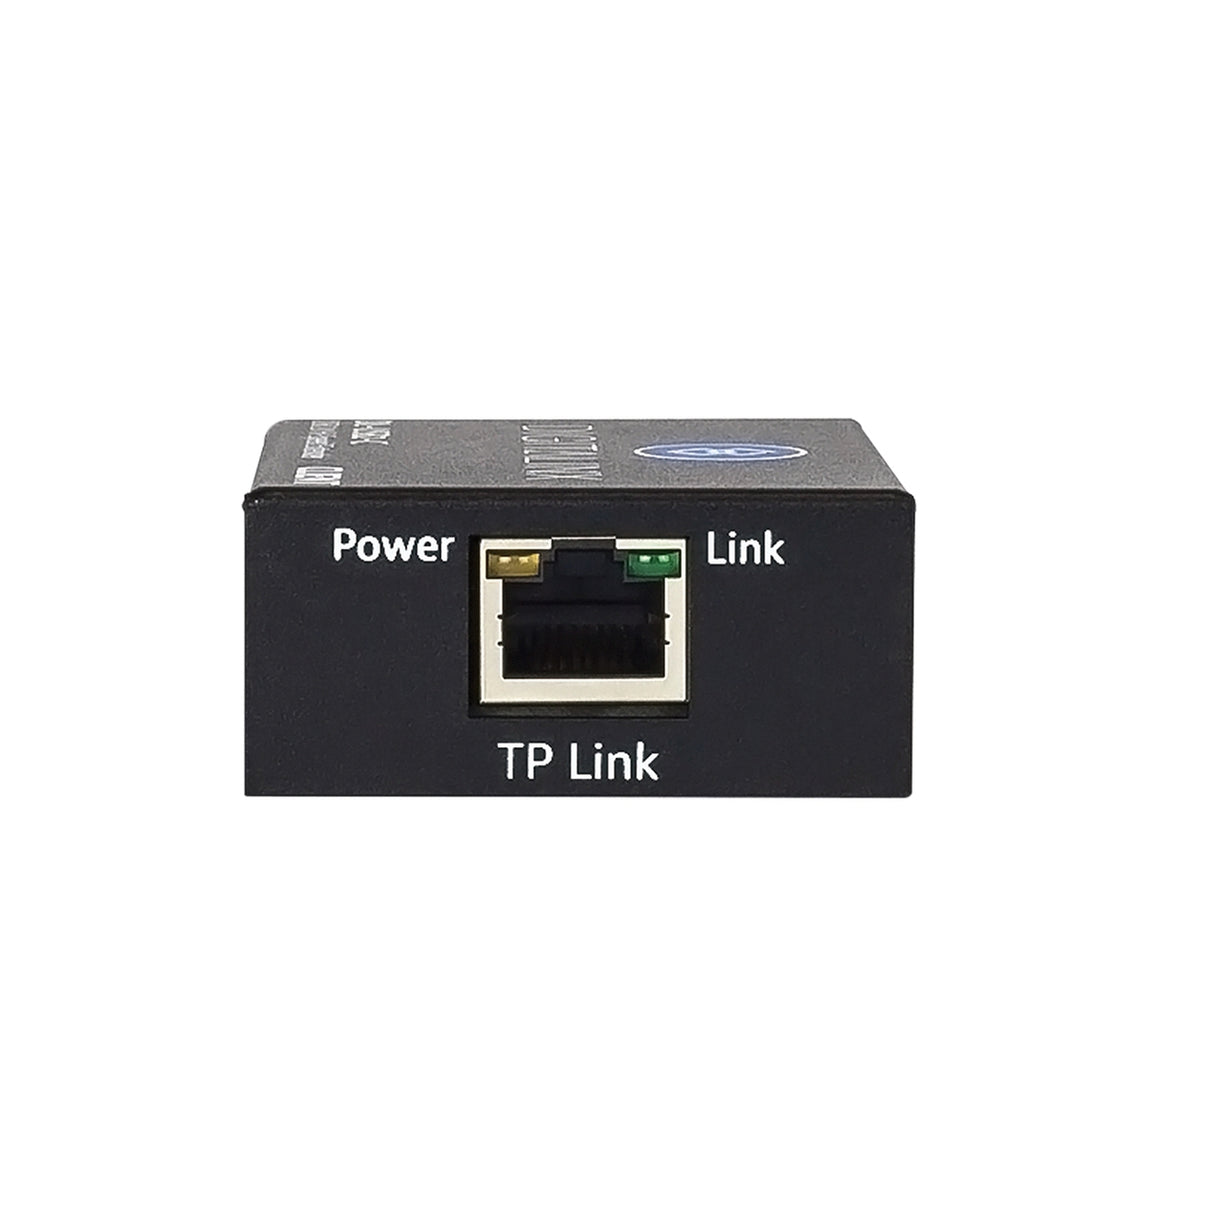 DigitaLinx DL-USB2-C | USB 2.0 Hi Speed Twisted Pair Extender Client